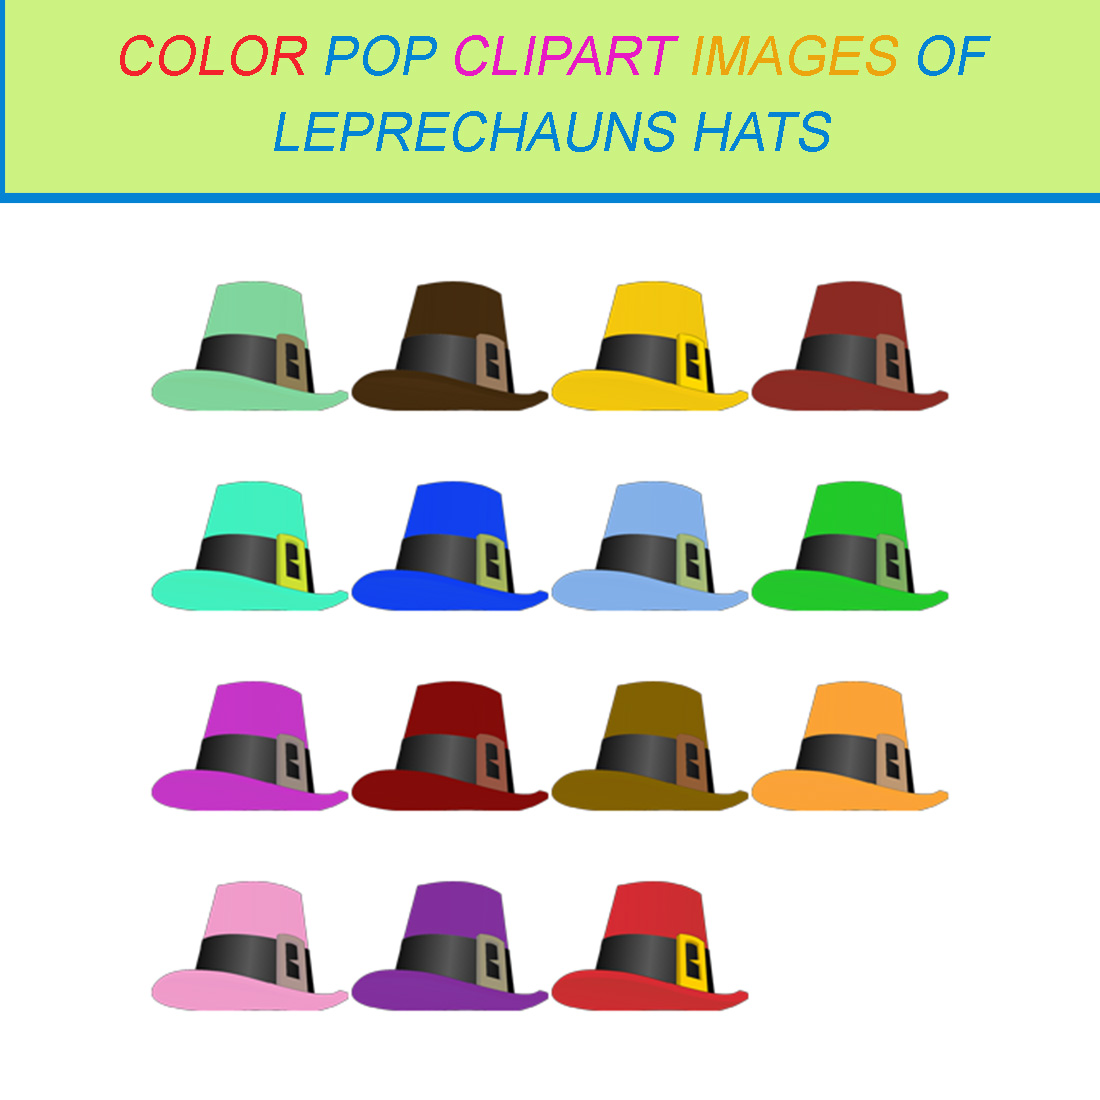 15 COLOR POP CLIPART IMAGES OF LEPRECHAUNS HATS cover image.